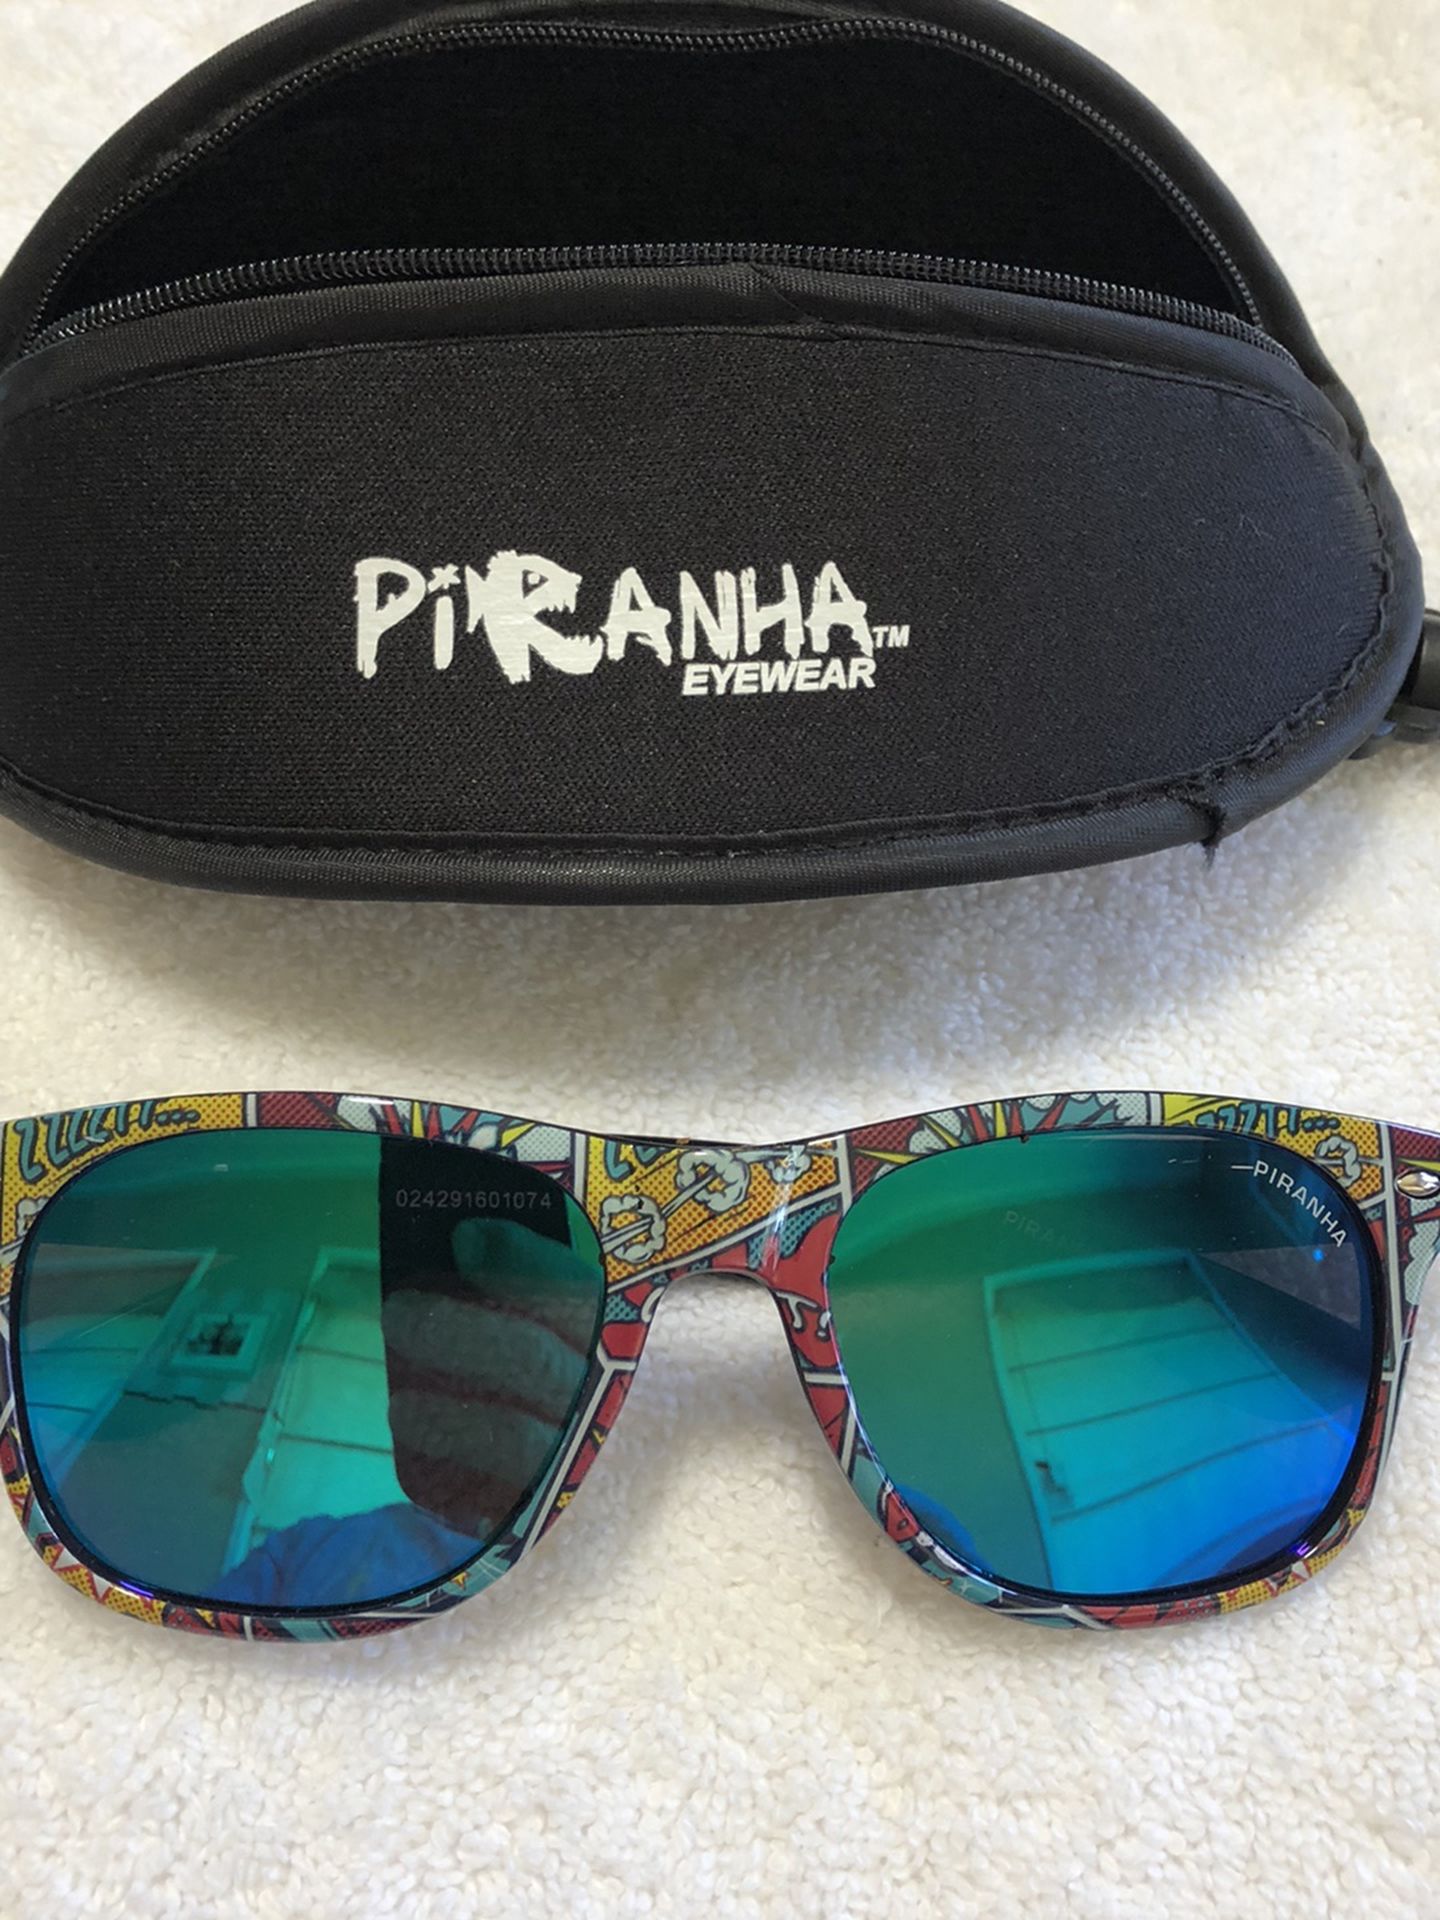 Piranha Sunglasses & Case for Sale in Oakwood, GA - OfferUp